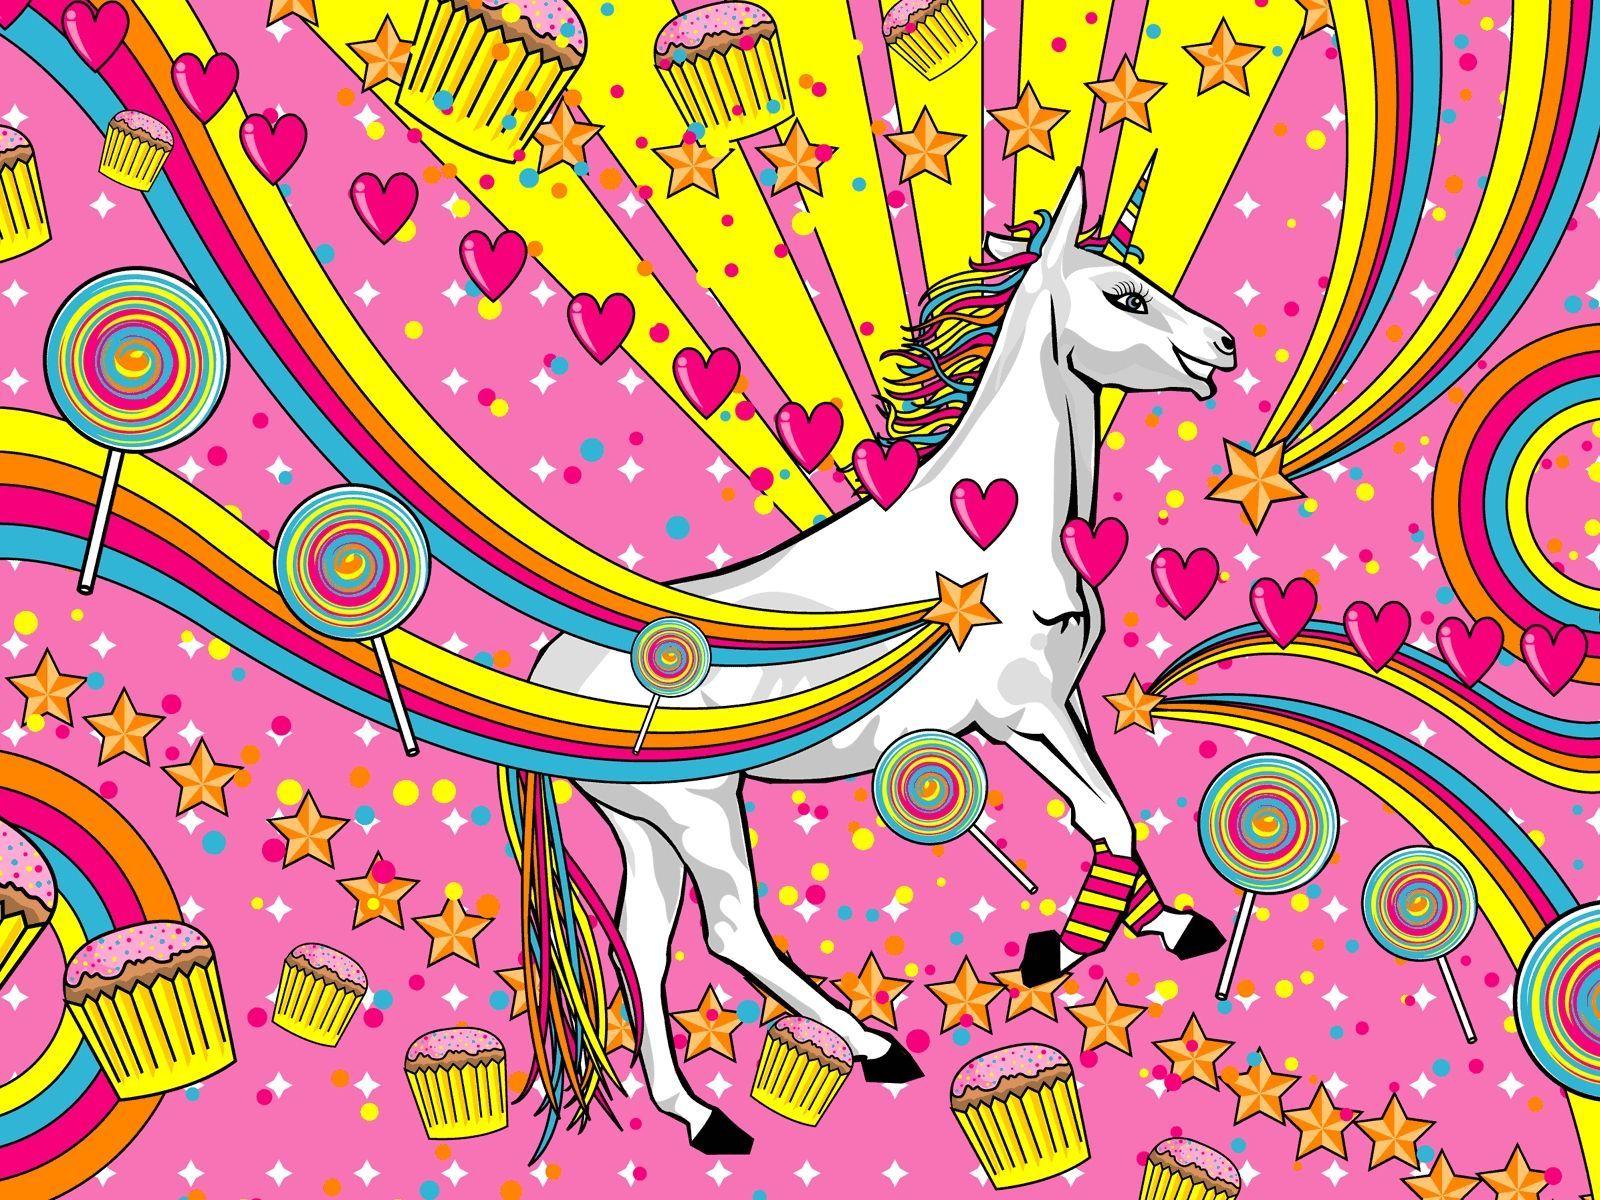 Free desktop background unicorns Download Desktop